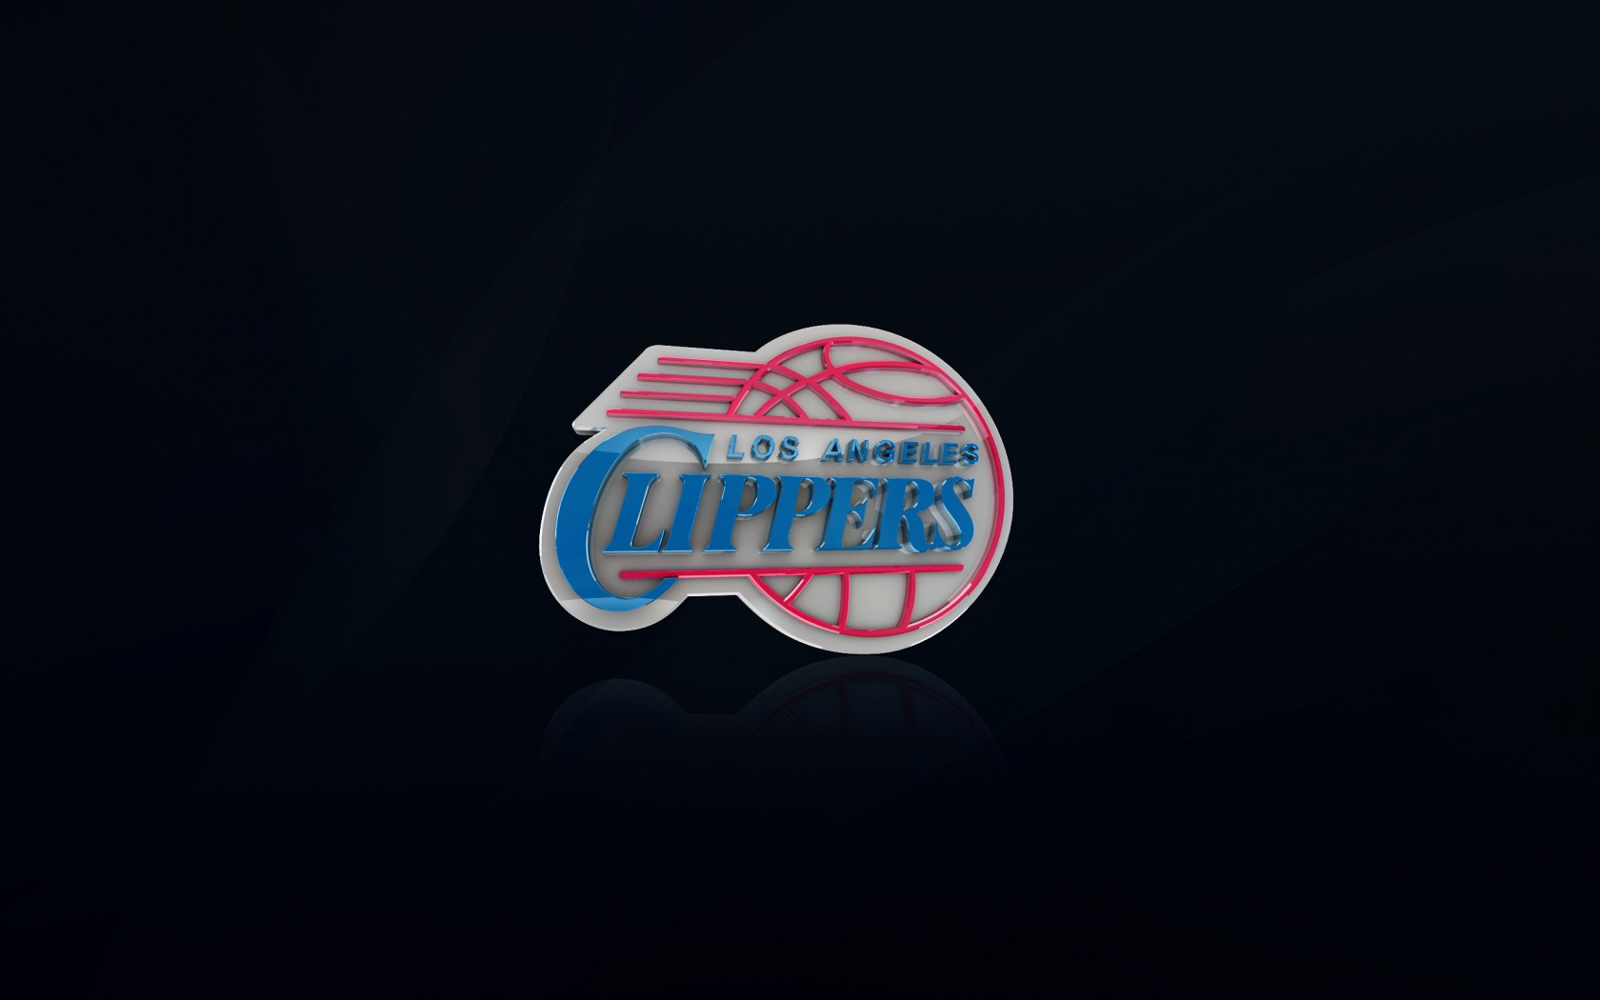 Los Angeles Clippers iPhone Wallpaper - WallpaperSafari1600 x 1000